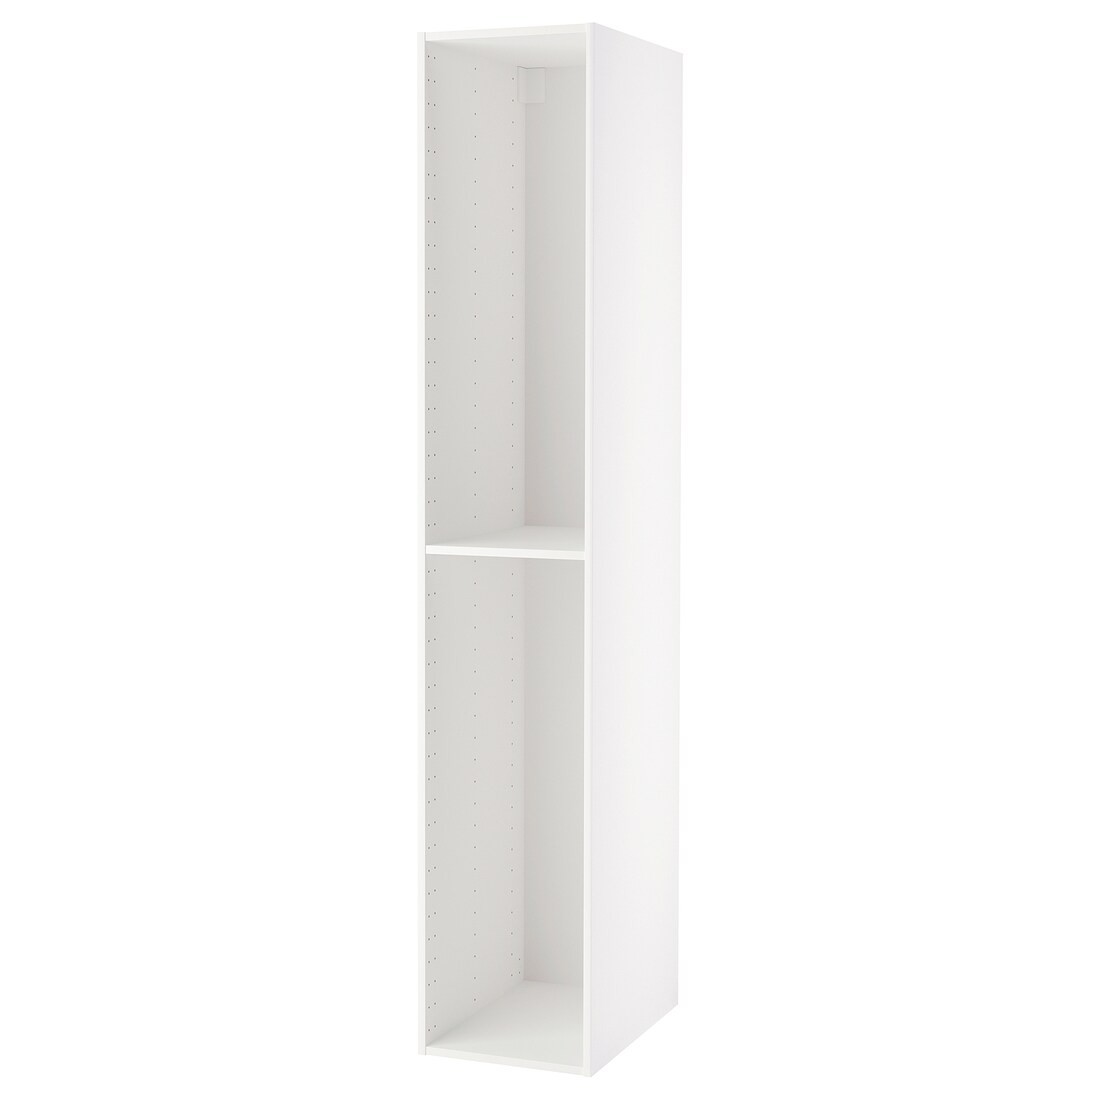 IKEA METOD МЕТОД Каркас високої шафи, білий, 40x60x220 см 10212558 | 102.125.58